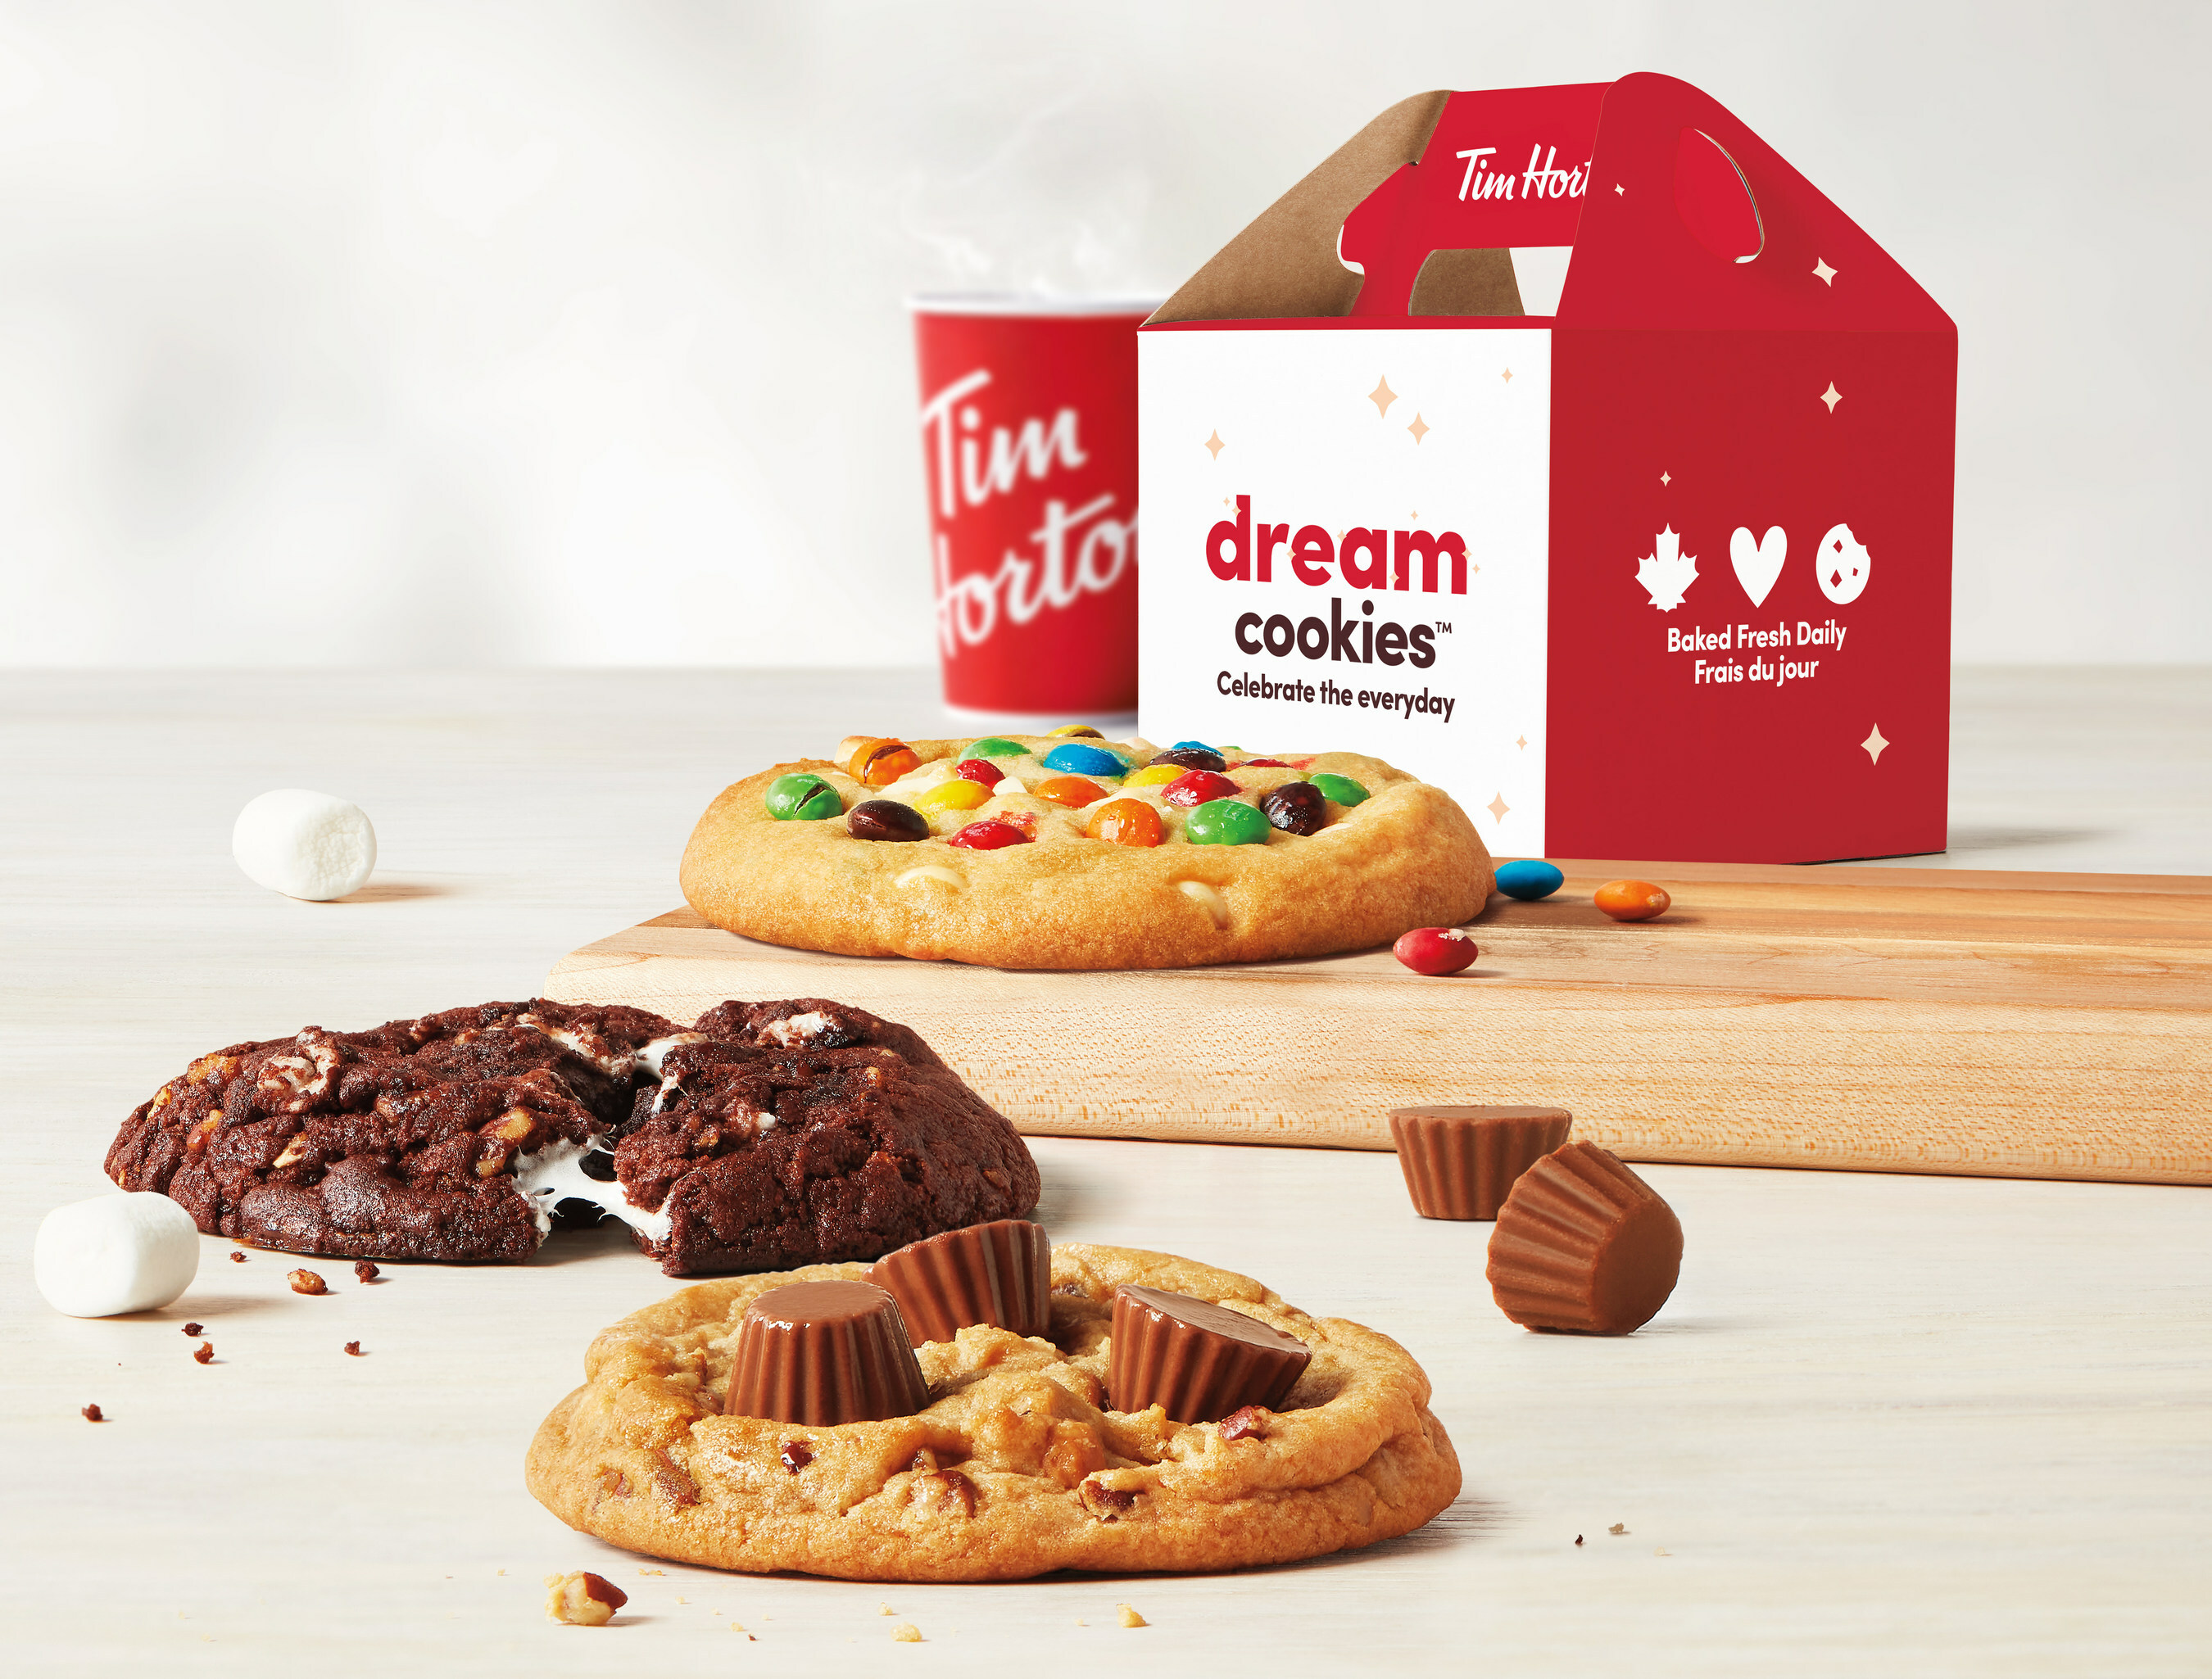 Tim Hortons Dream Cookies photo